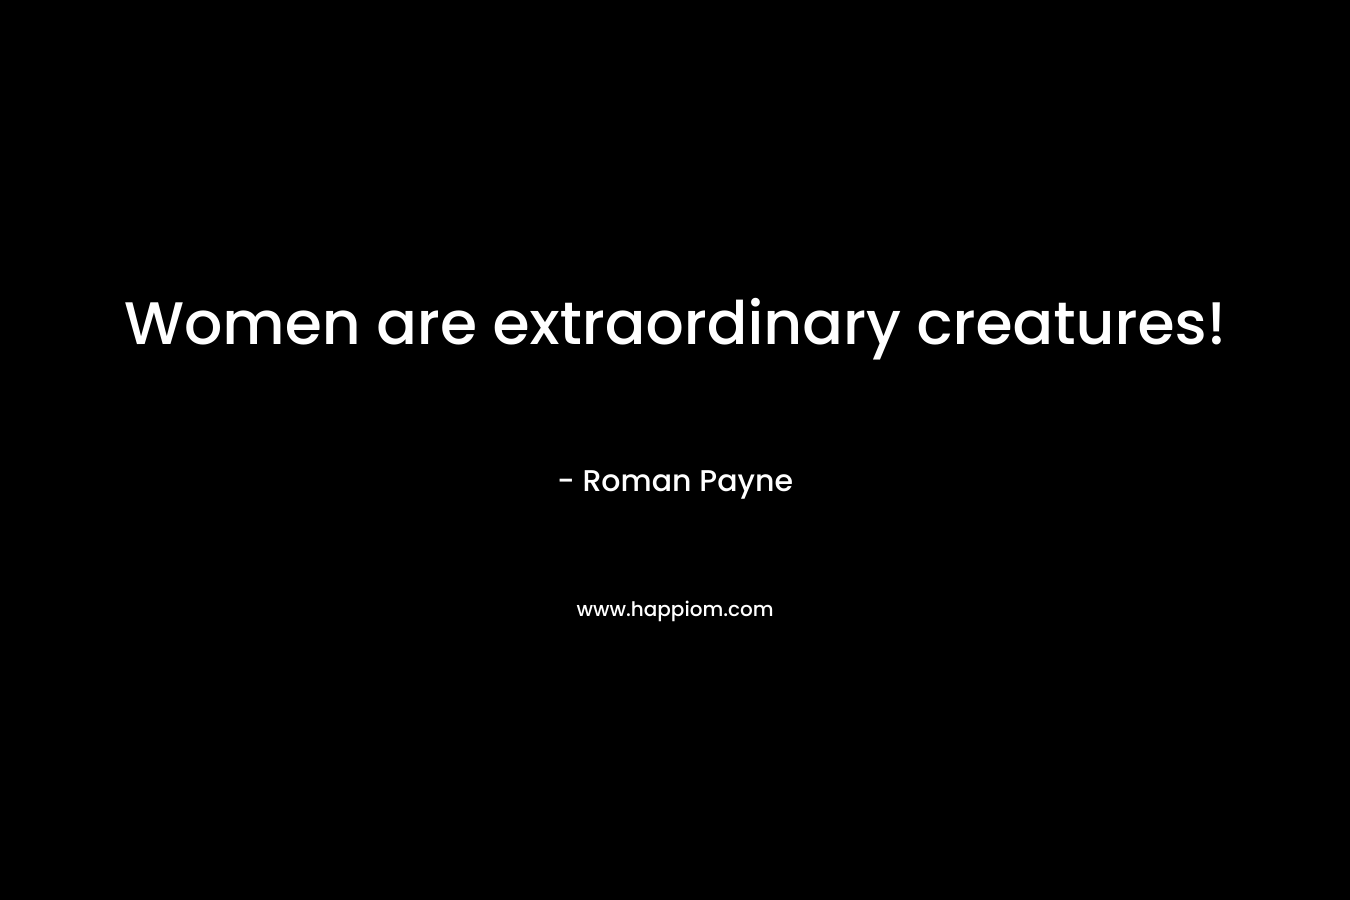 Women are extraordinary creatures!